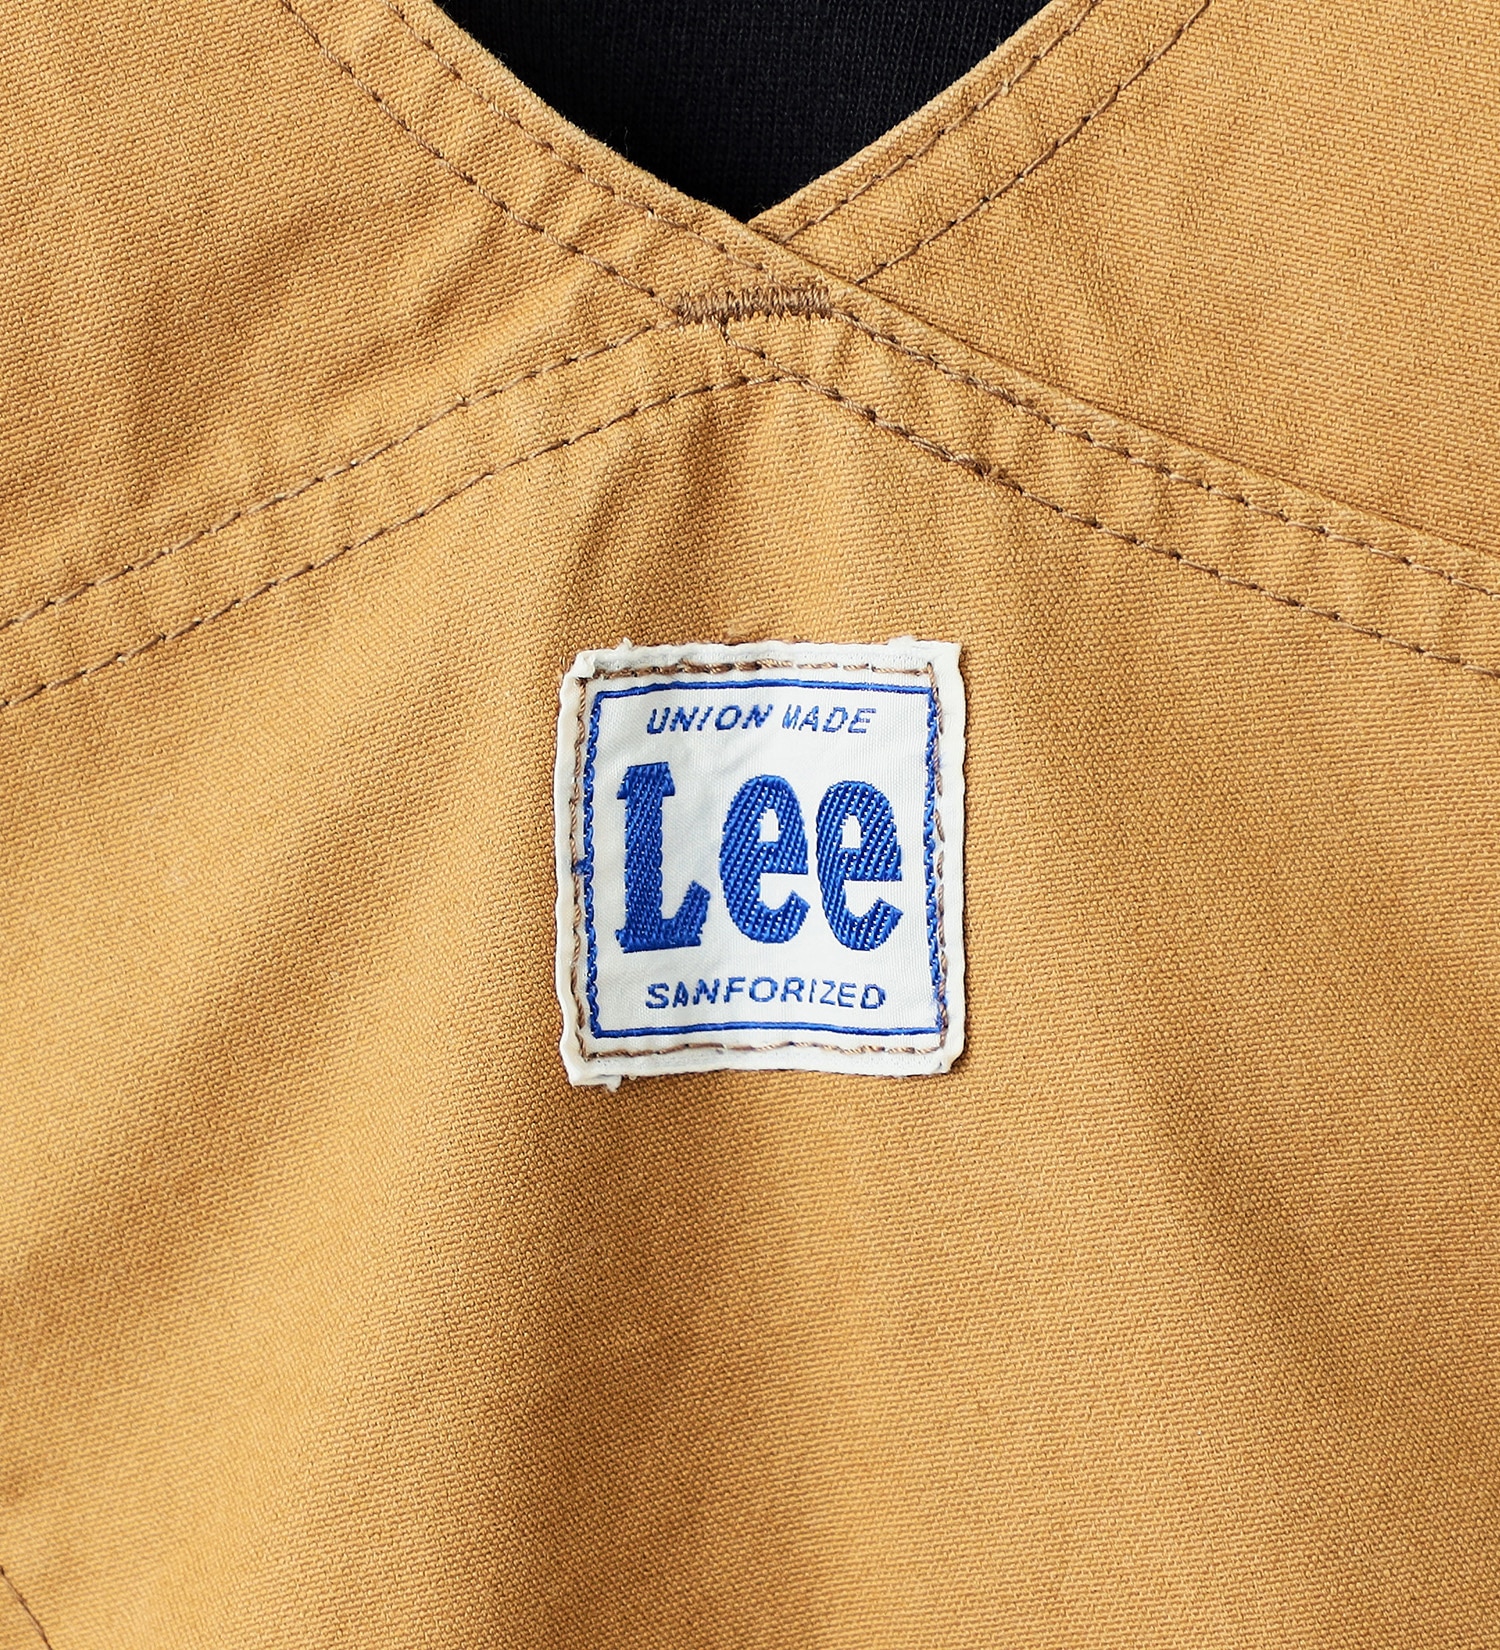 Lee(リー)の【売り尽くしSALE】【Lee OUTDOORS】ダブルニー アウトドアオーバーオールパンツ|オールインワン/サロペット/オーバーオール/メンズ|ブラウン